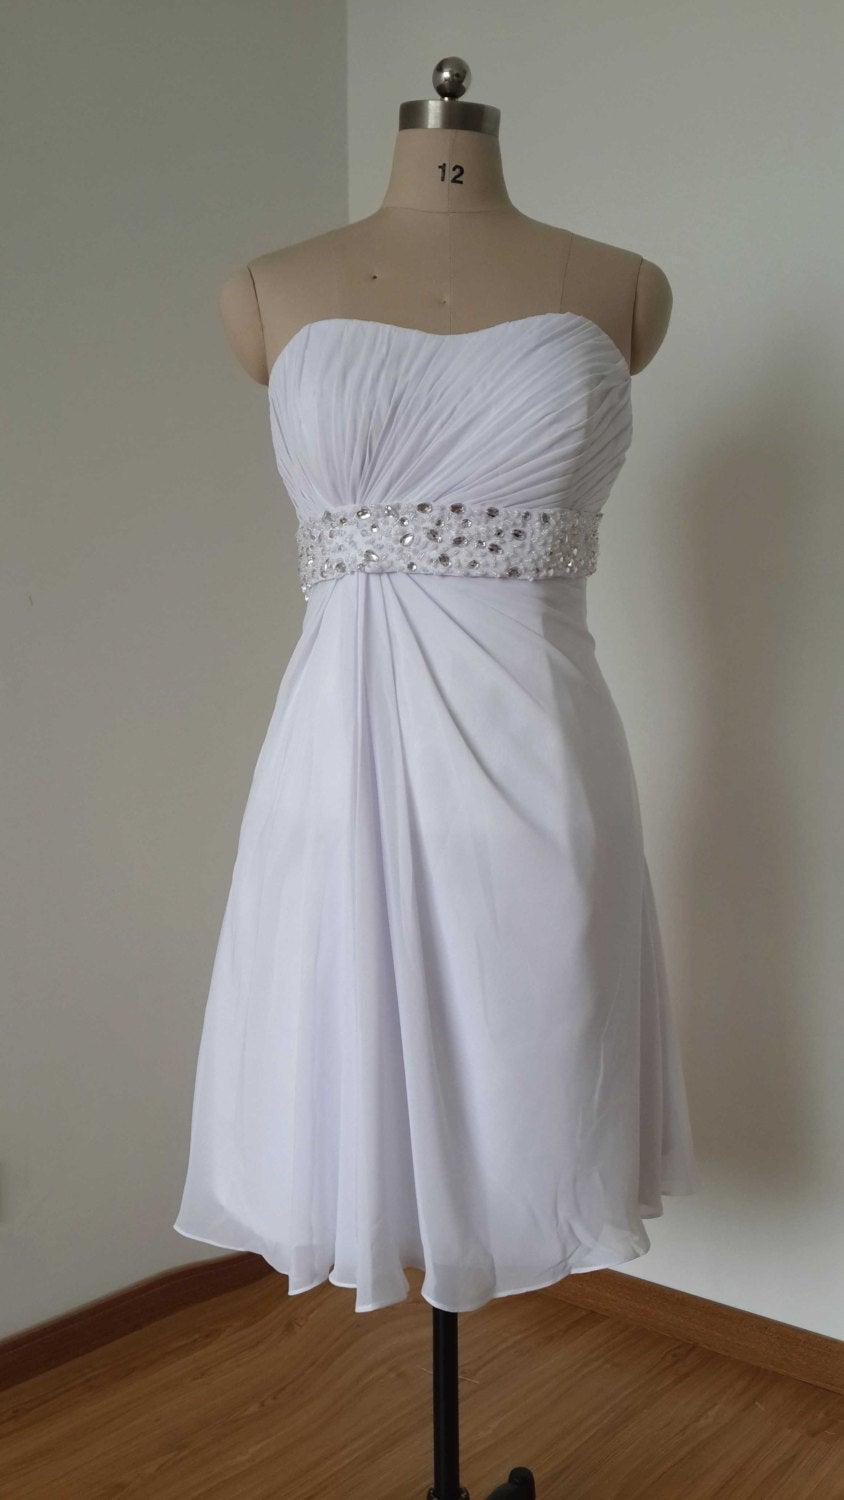 زفاف - Strapless White Chiffon Short Bridesmaid Dress with Beaded Band